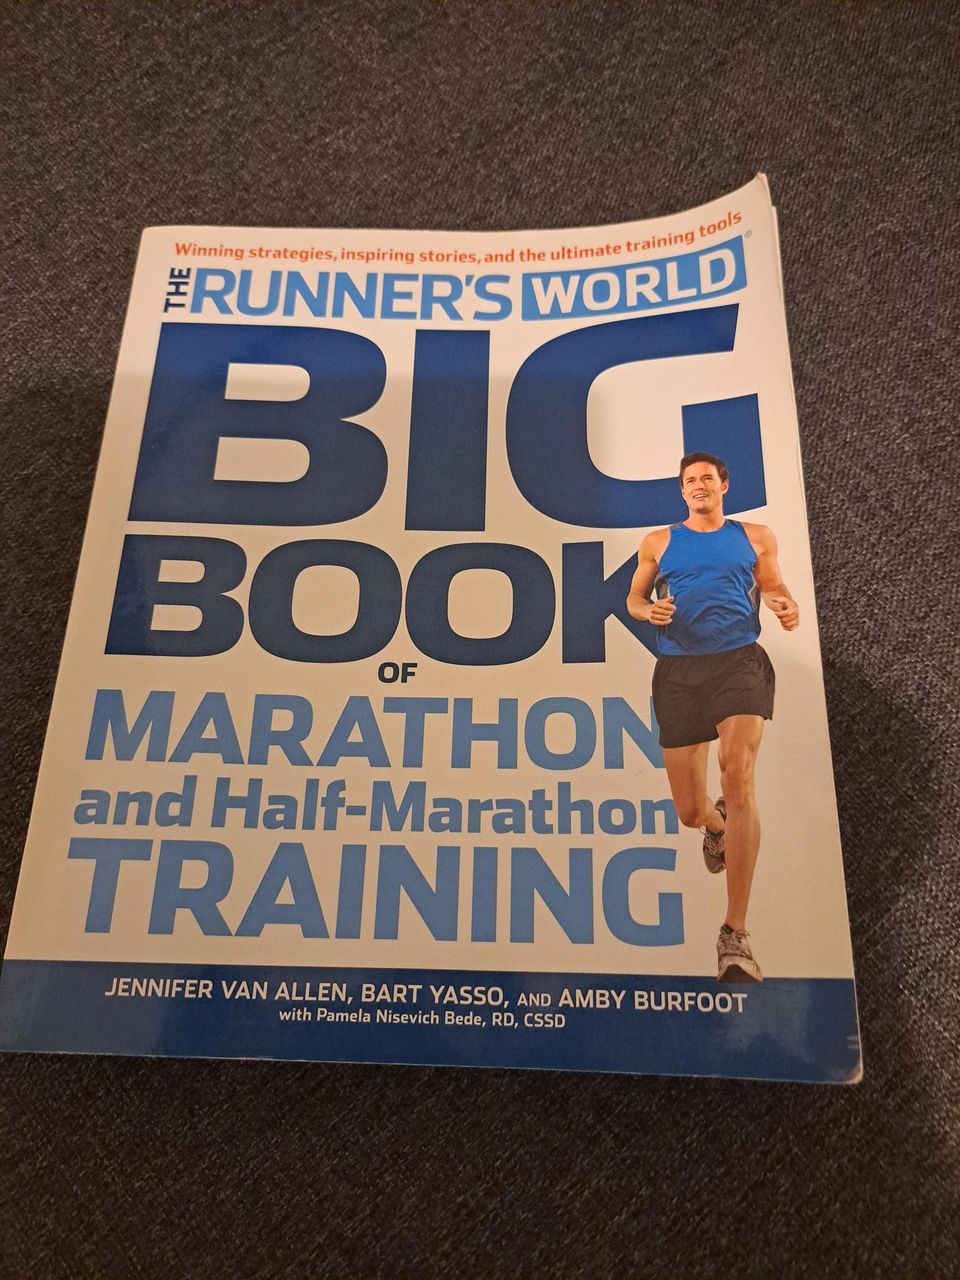 The Runners World BIG BOOK Of Marathon and Half-Marathon Training